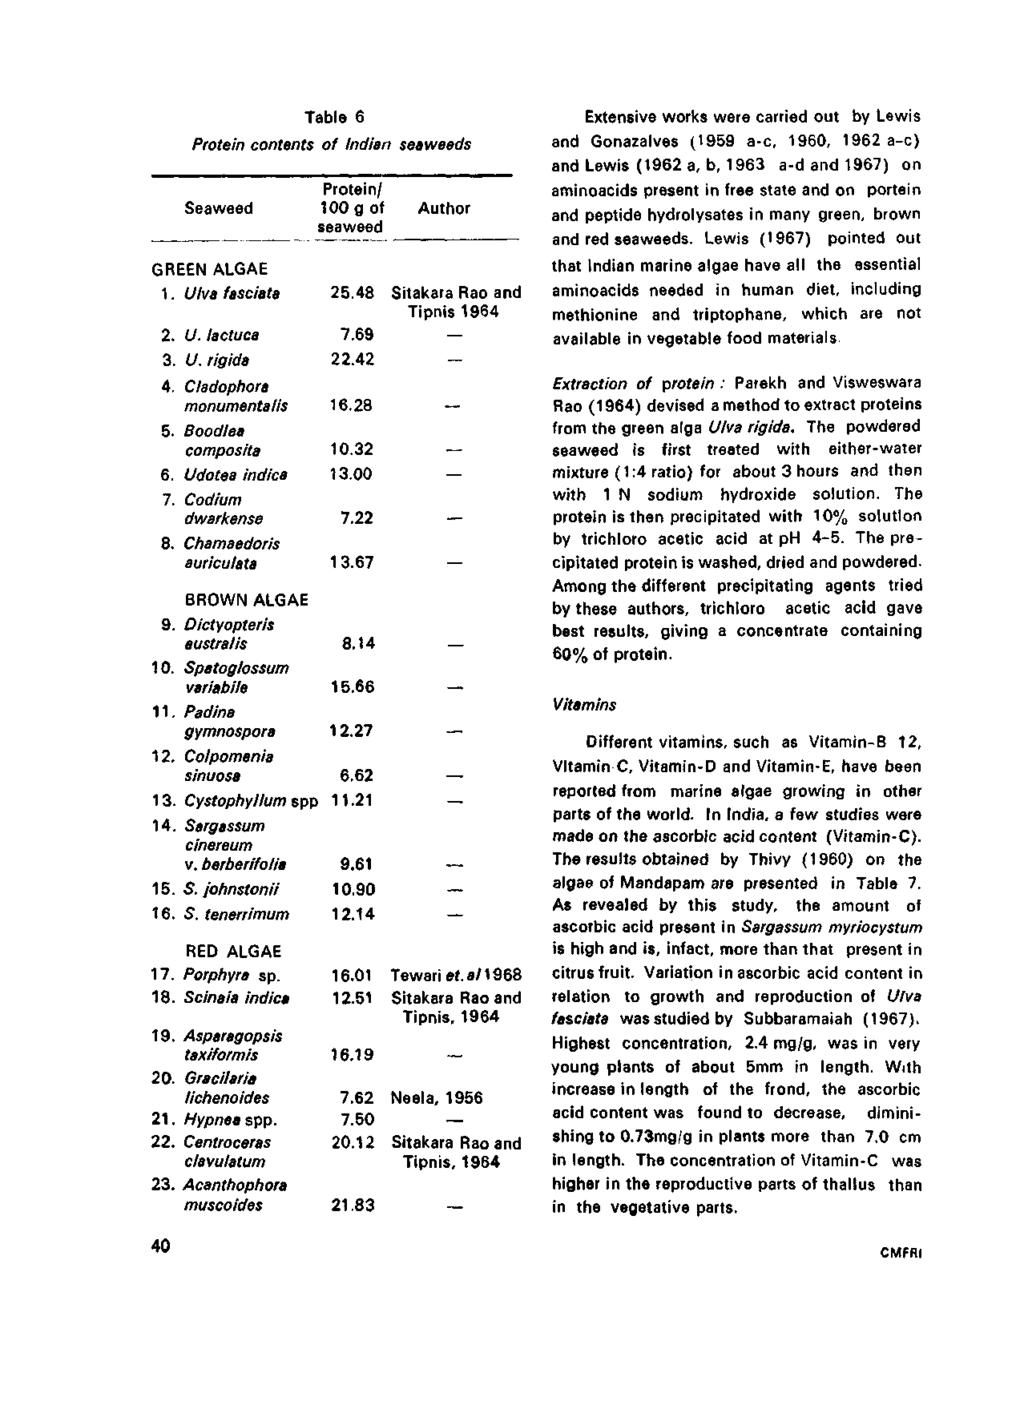 Table 6 Protein contents of Indian seaweeds Seaweed GREEN ALGAE 1. Ulva fasciata 2. U. iactuca 3. U. rig id a 4. Cladoptiora monumentalis 5. Boodlea composita 6. Udotea indica 7. Codium dwarliense 8.